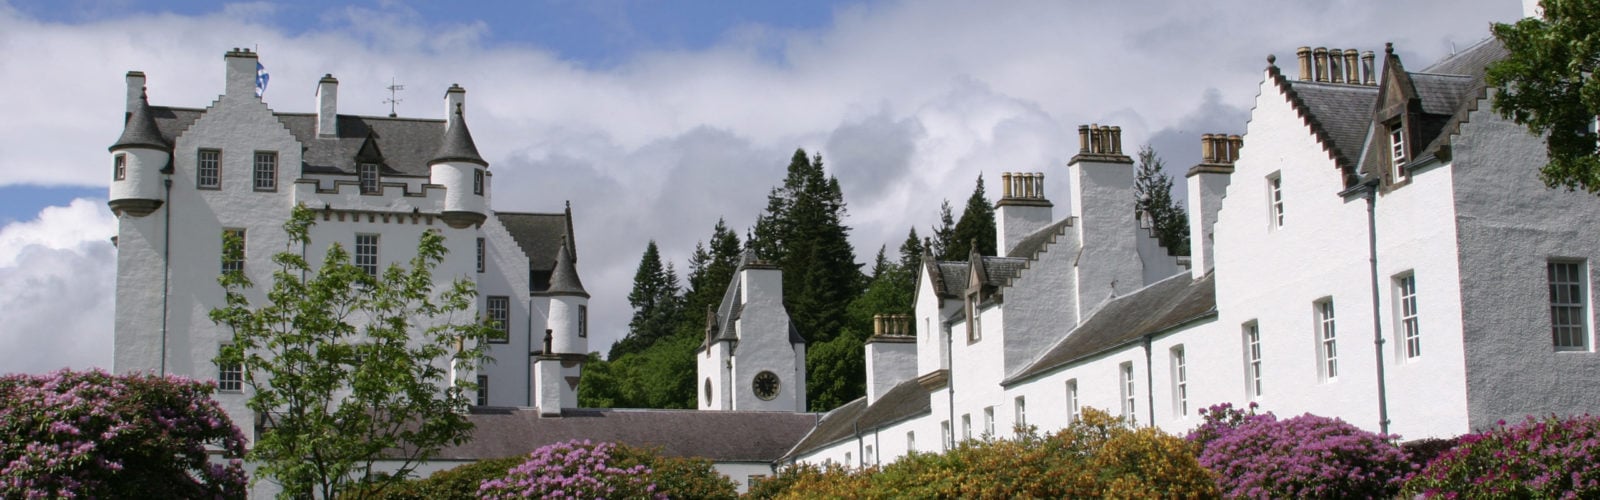 blair-castle-scotland